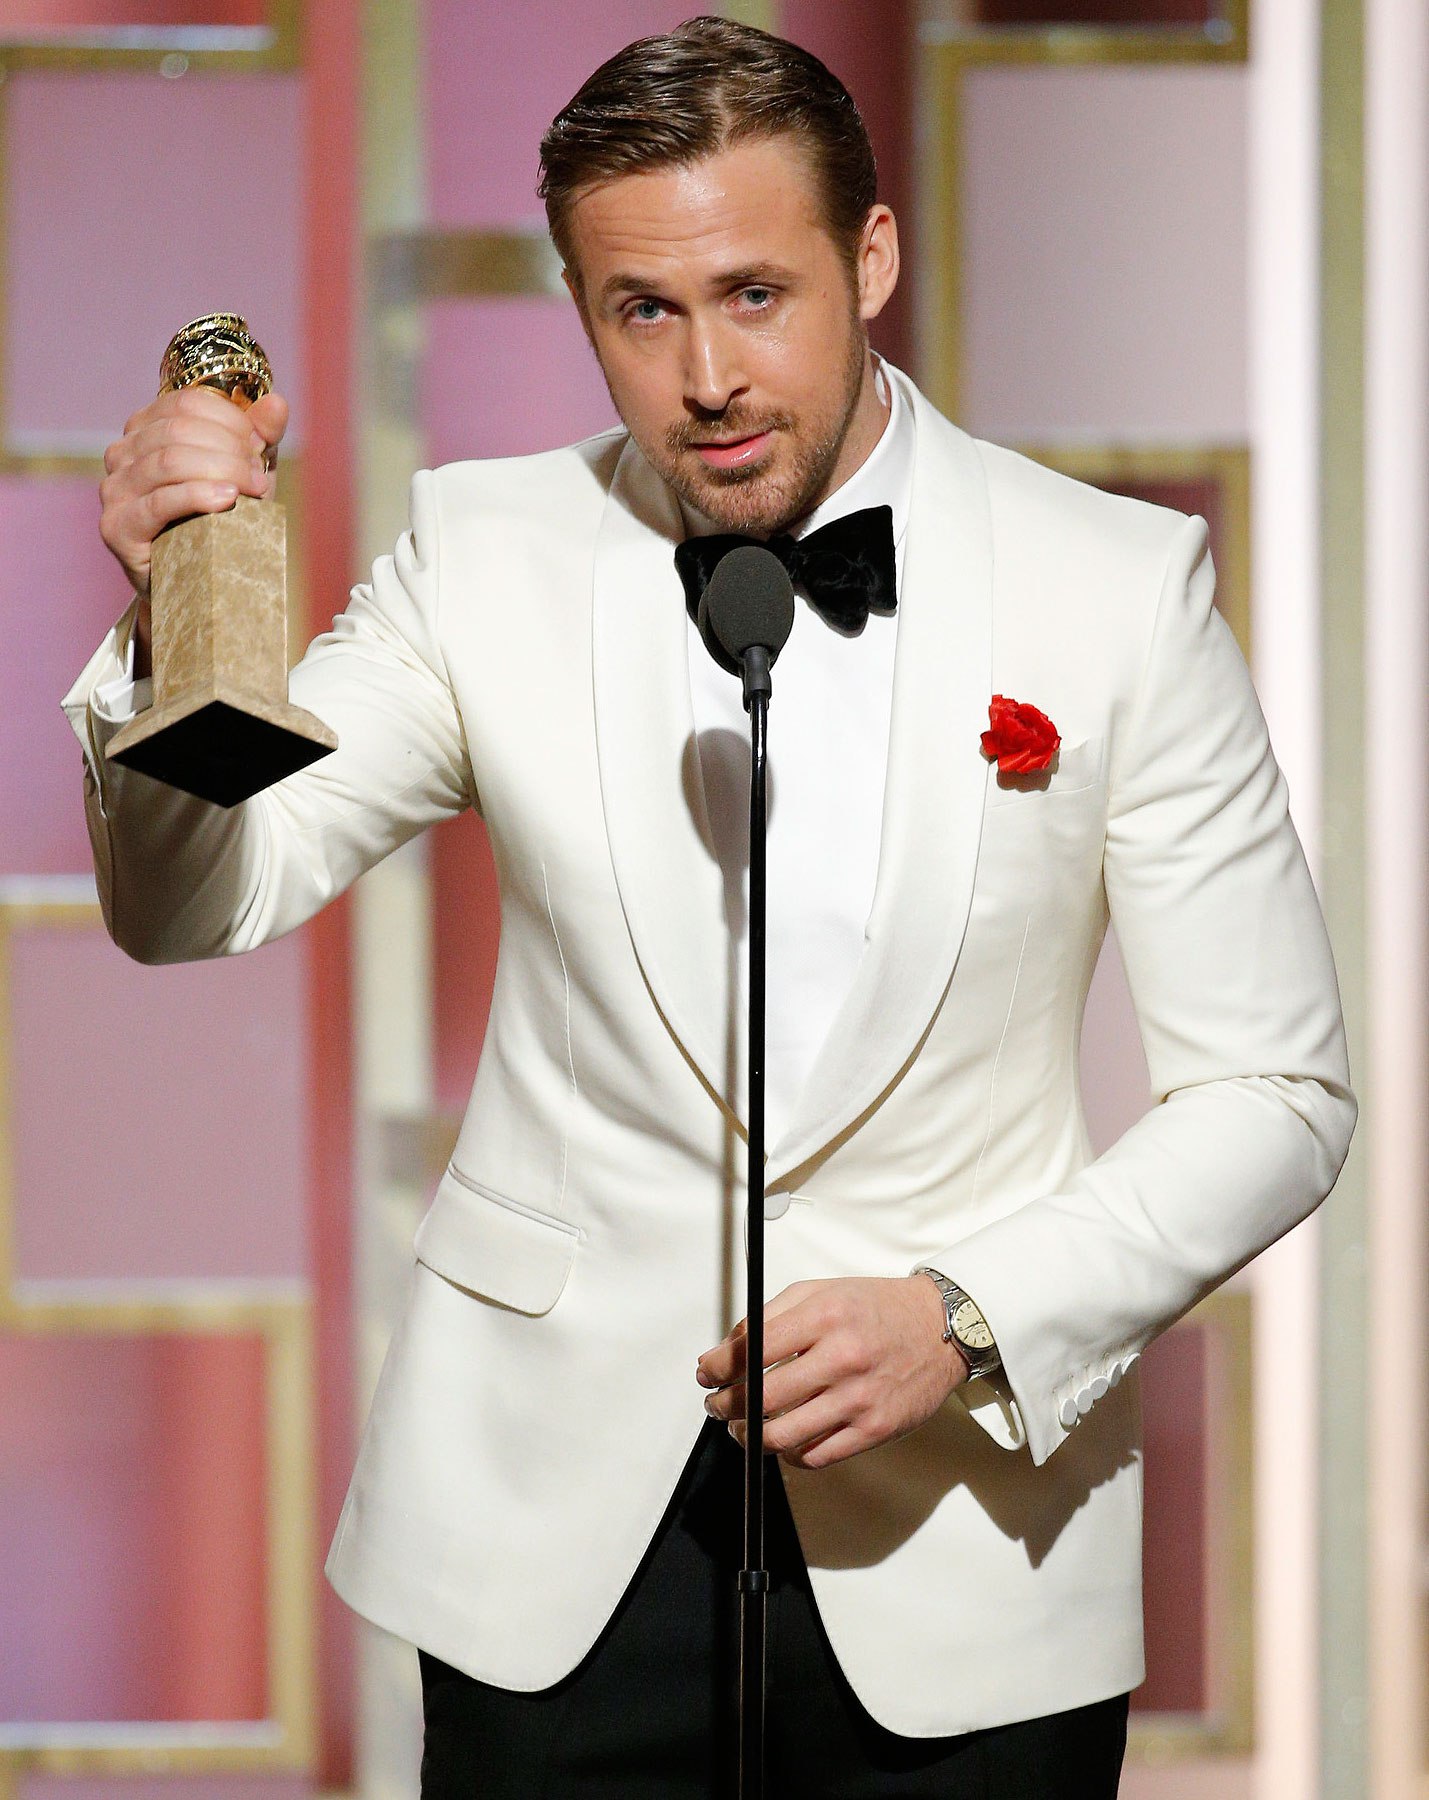 Watch Spotting: Ryan Gosling Wearing An 